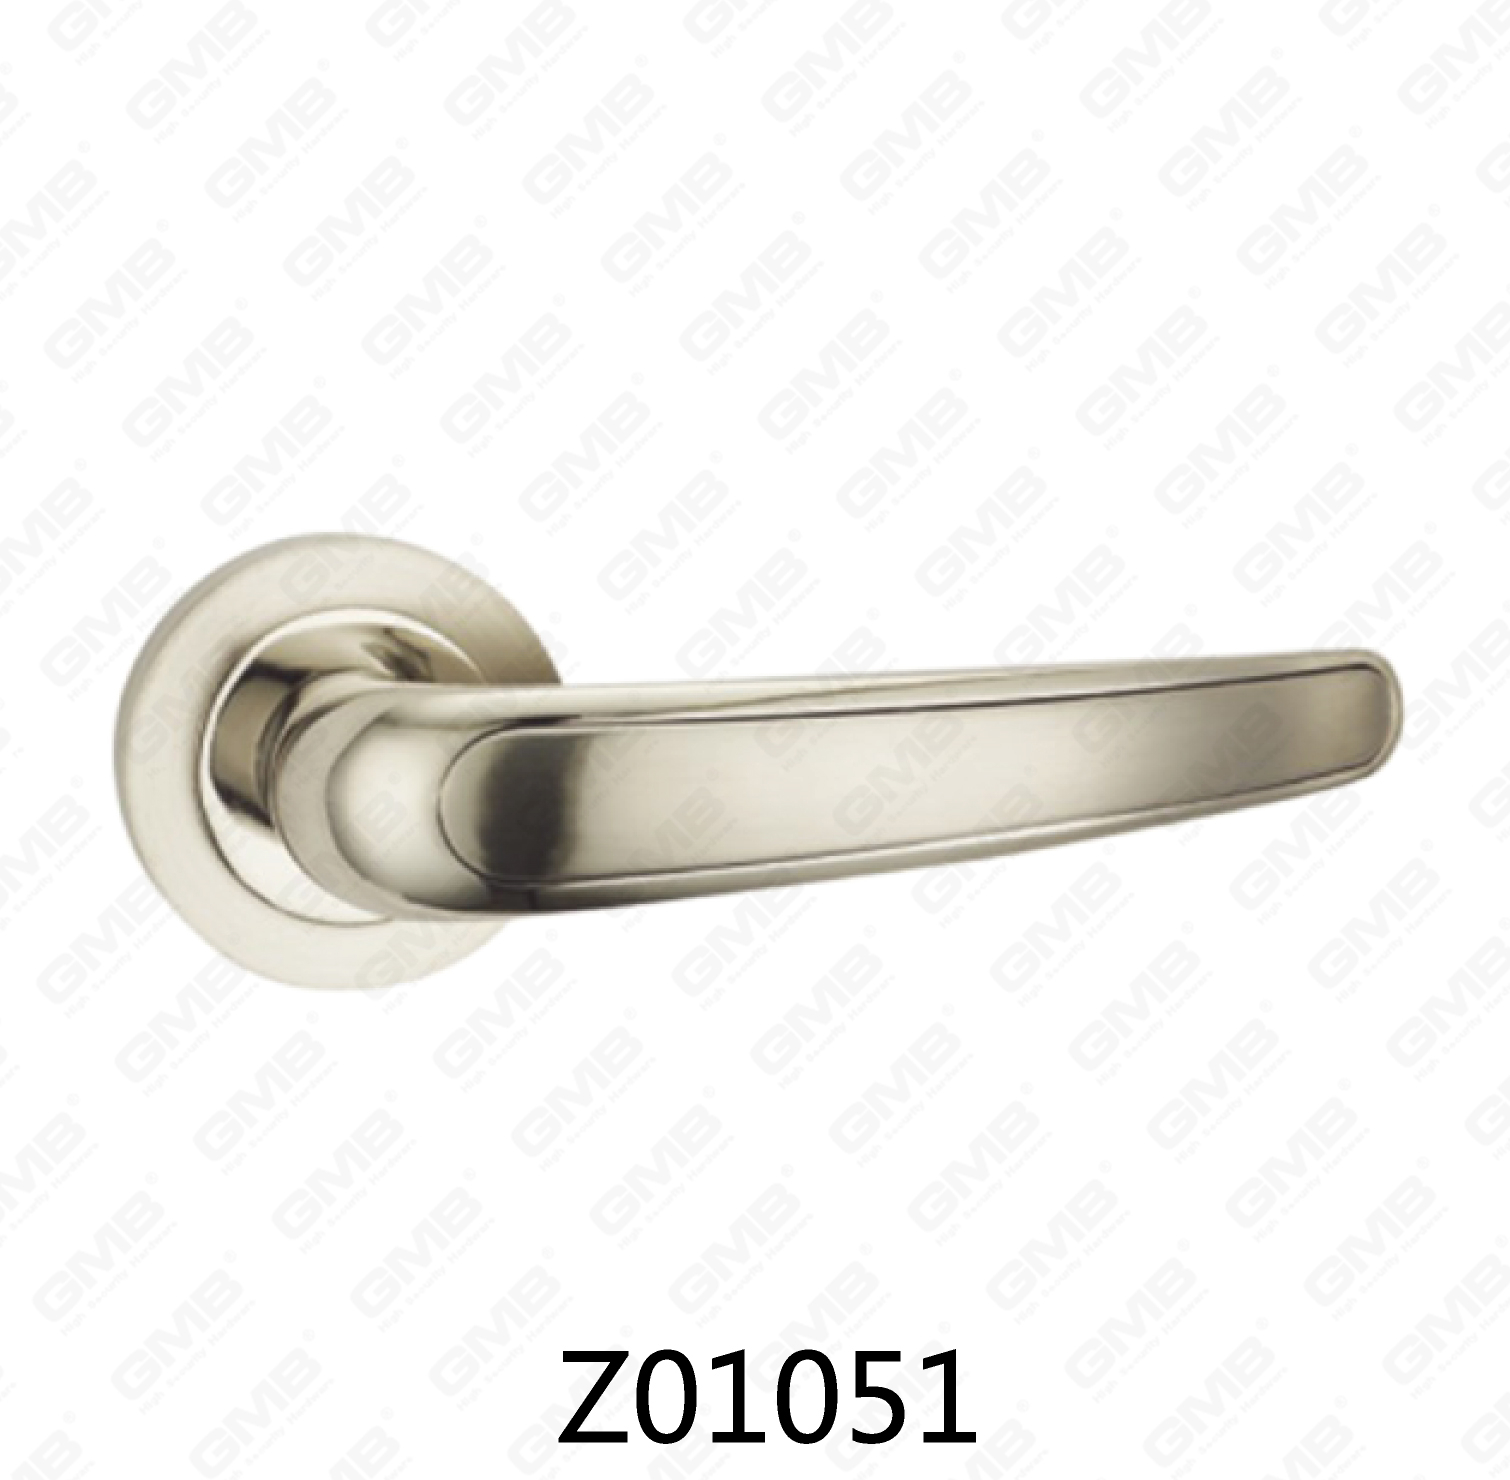 Manija de puerta de roseta de aluminio de aleación de zinc Zamak con roseta redonda (Z01051)